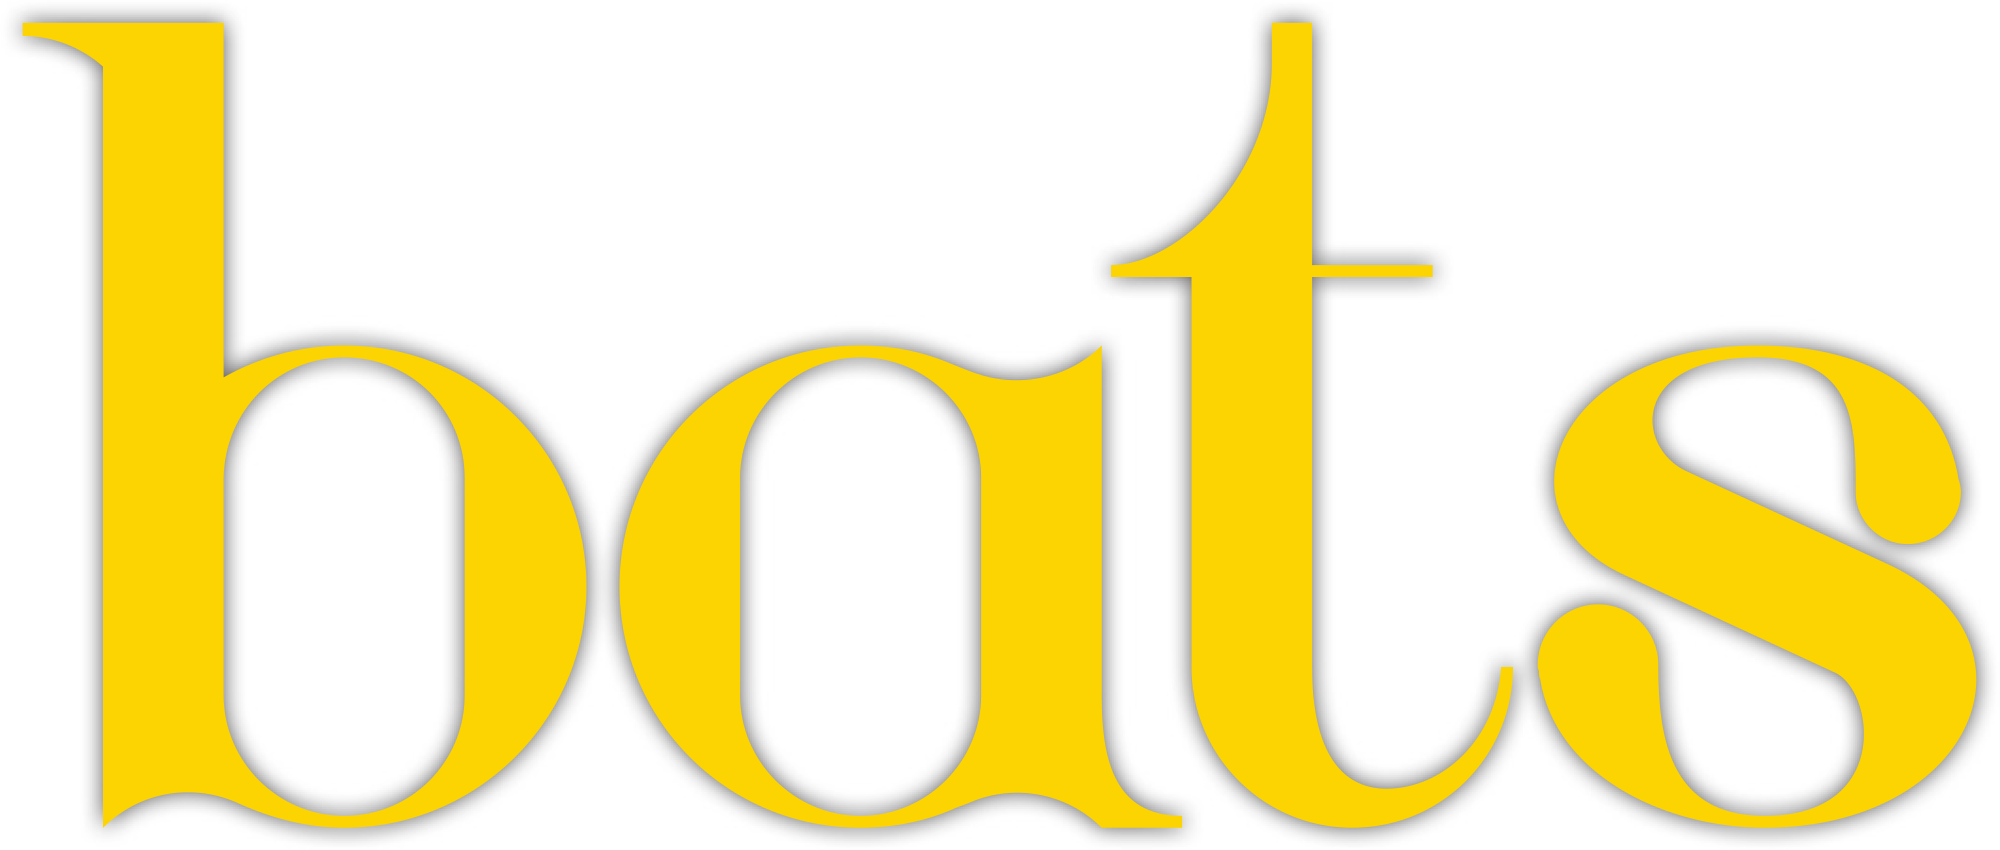 Bats magazine logo